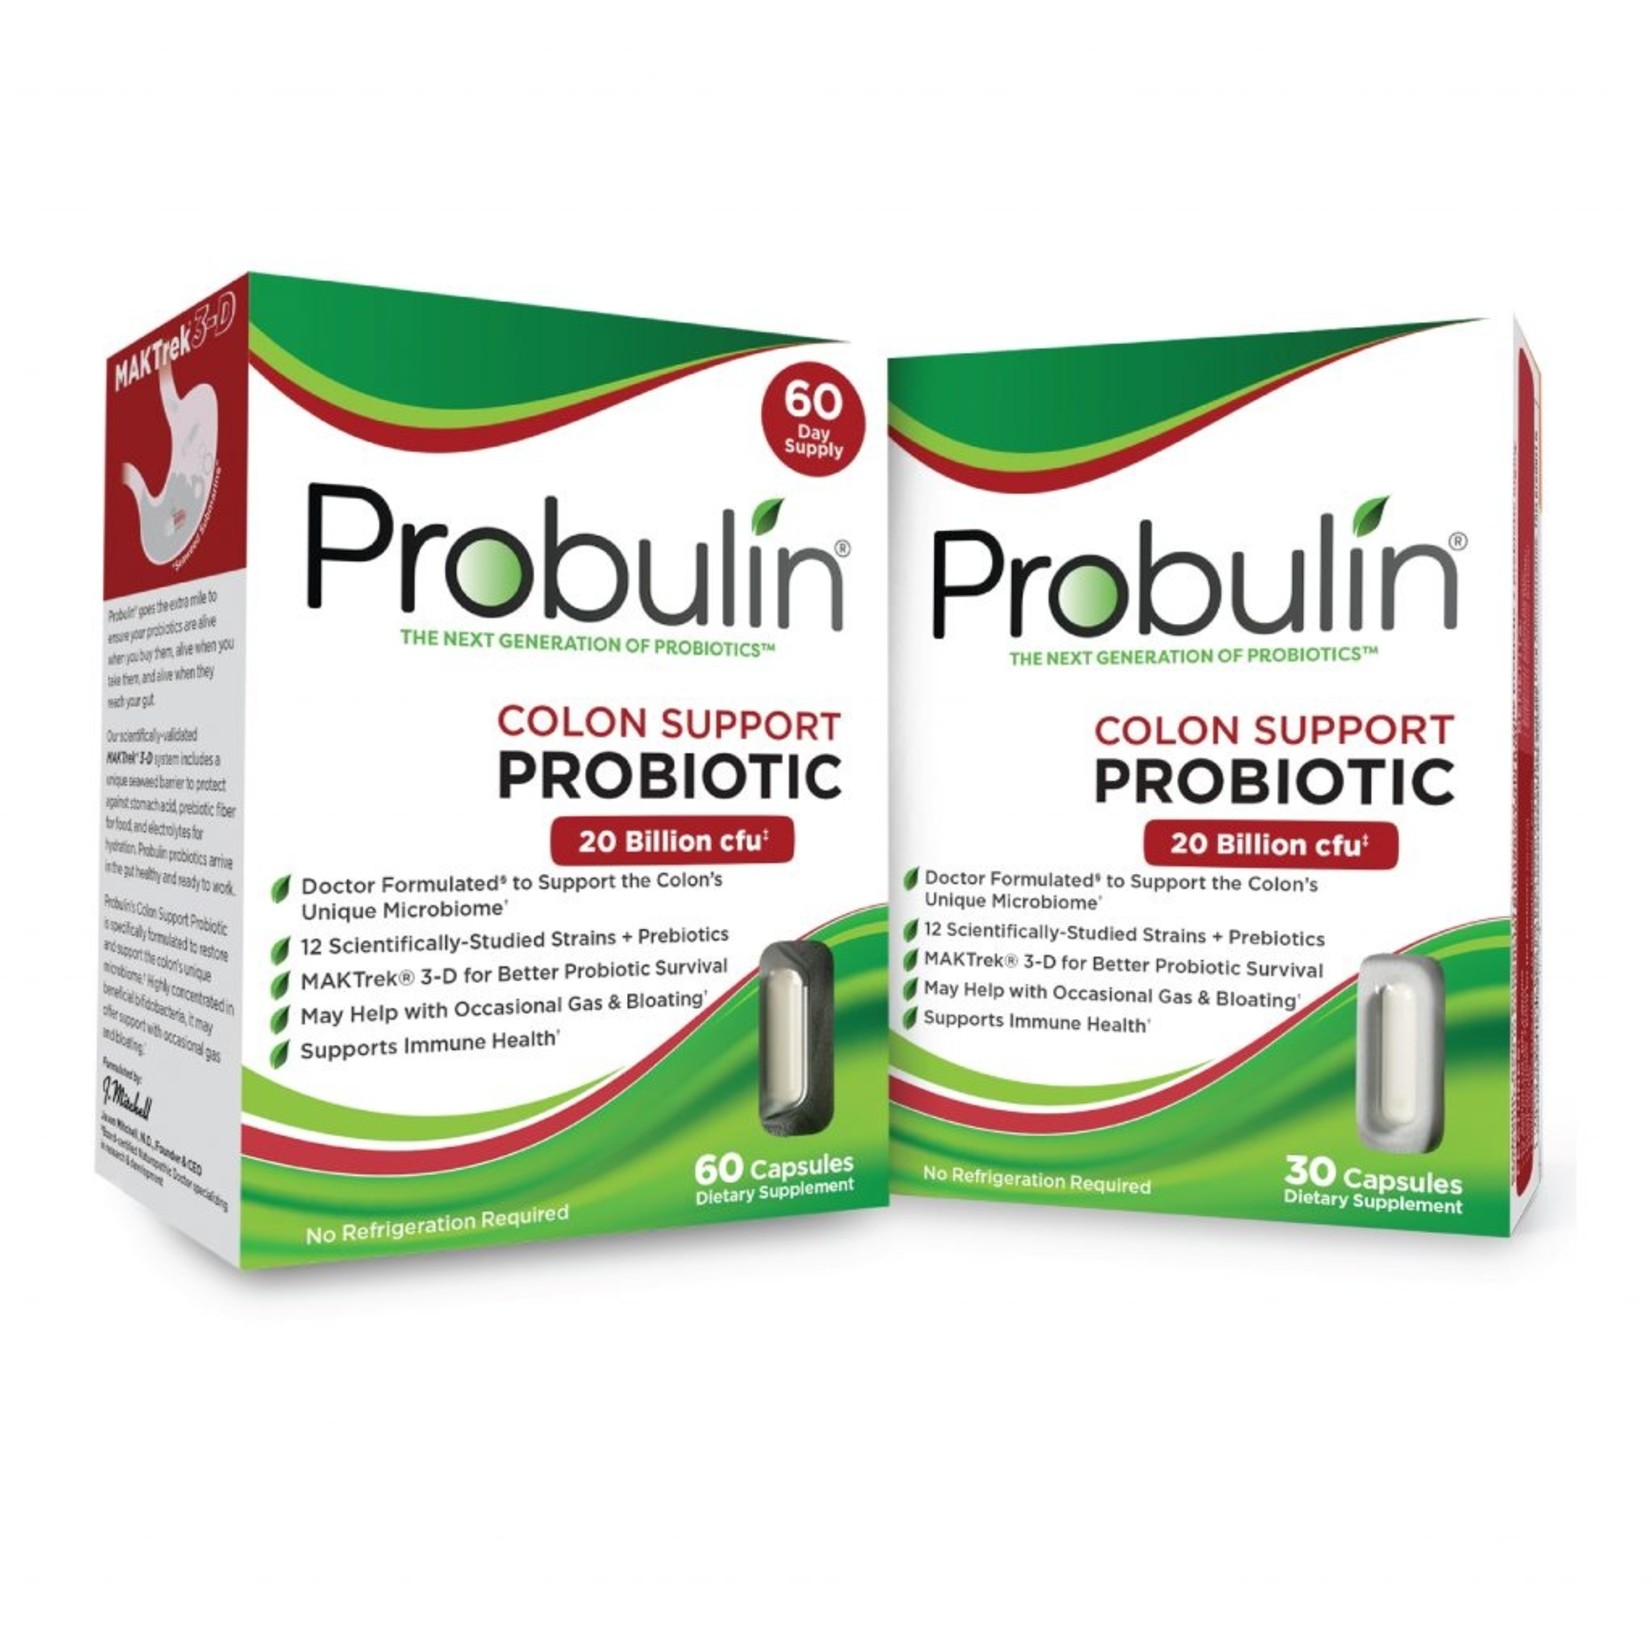 Probulin Probulin - Colon Support Probiotic - 60 Capsules